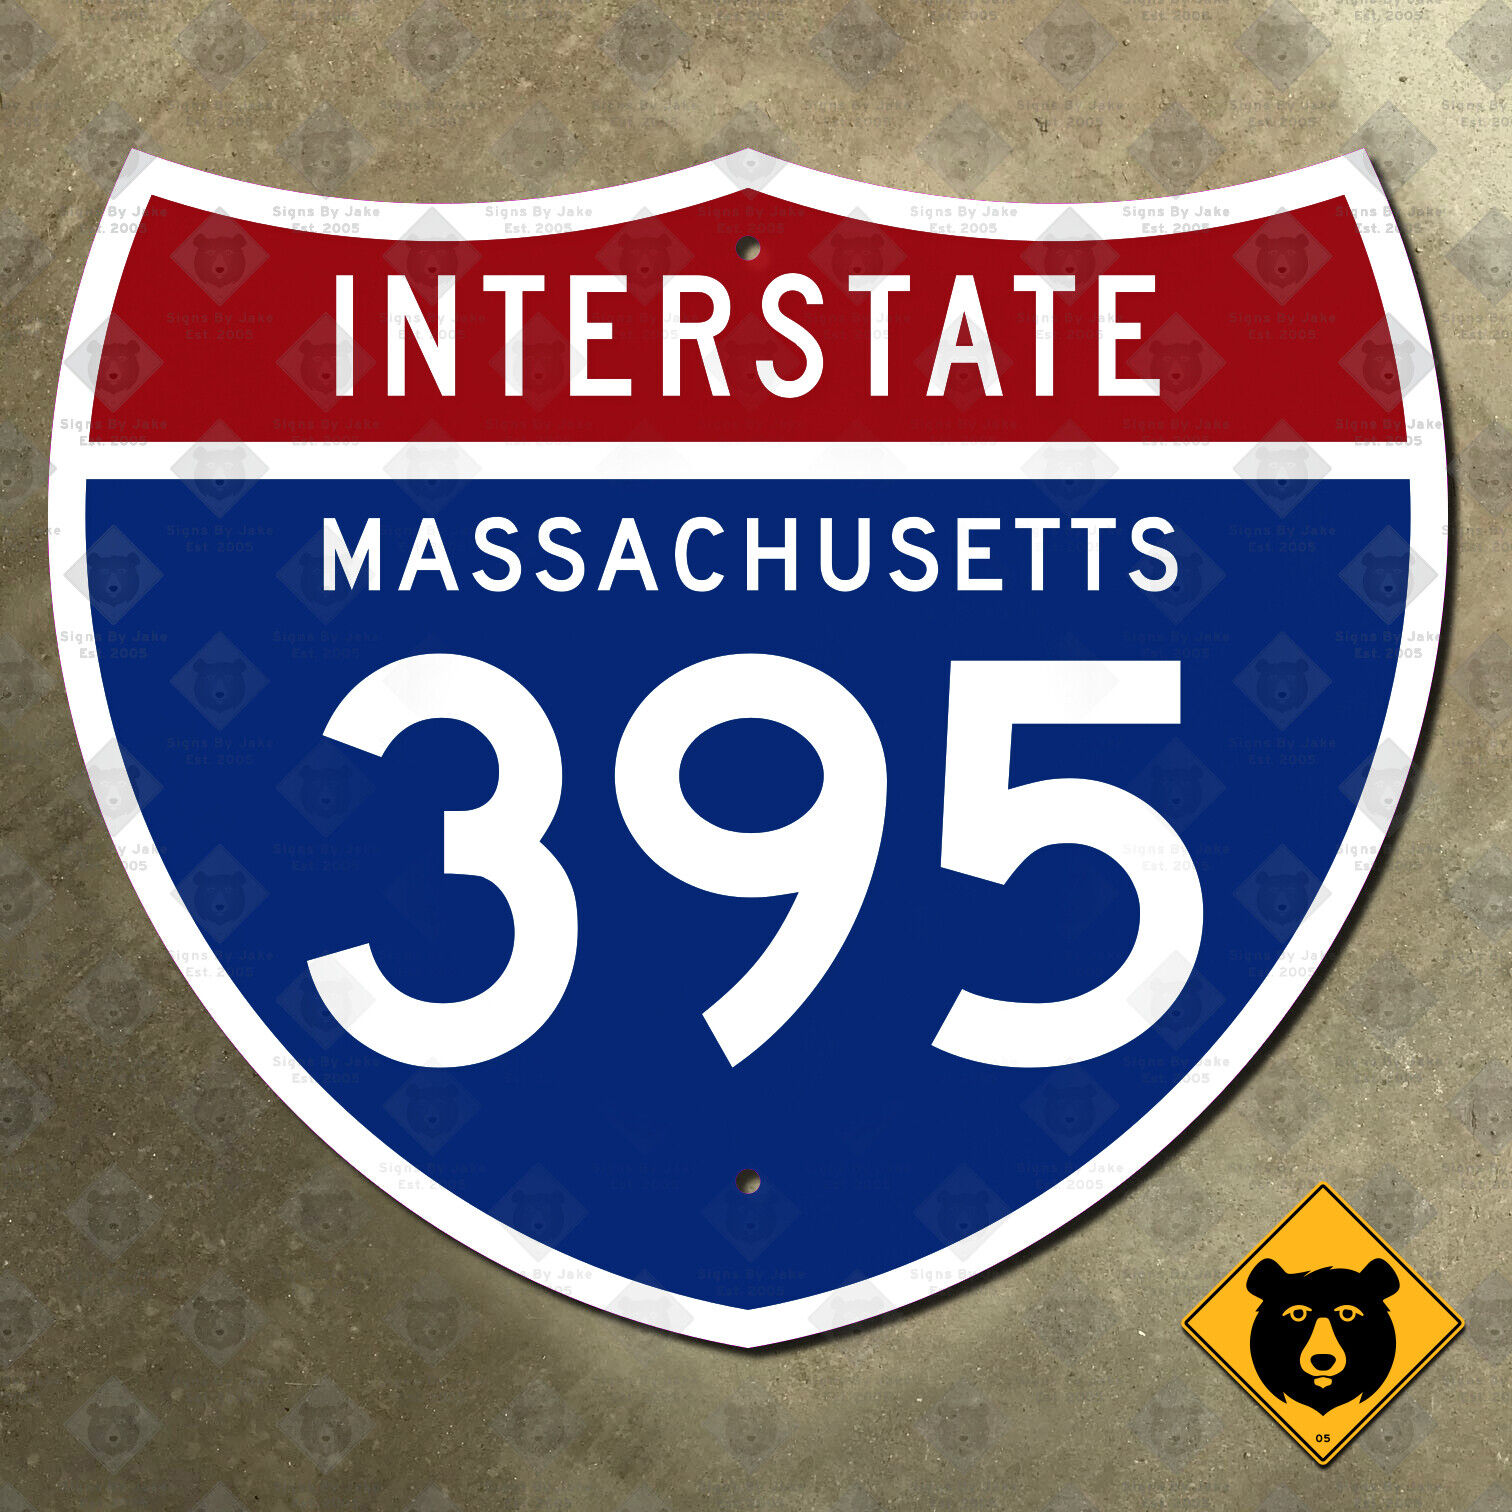 Massachusetts Interstate 395 highway route sign shield 1957 Webster Auburn 12x10